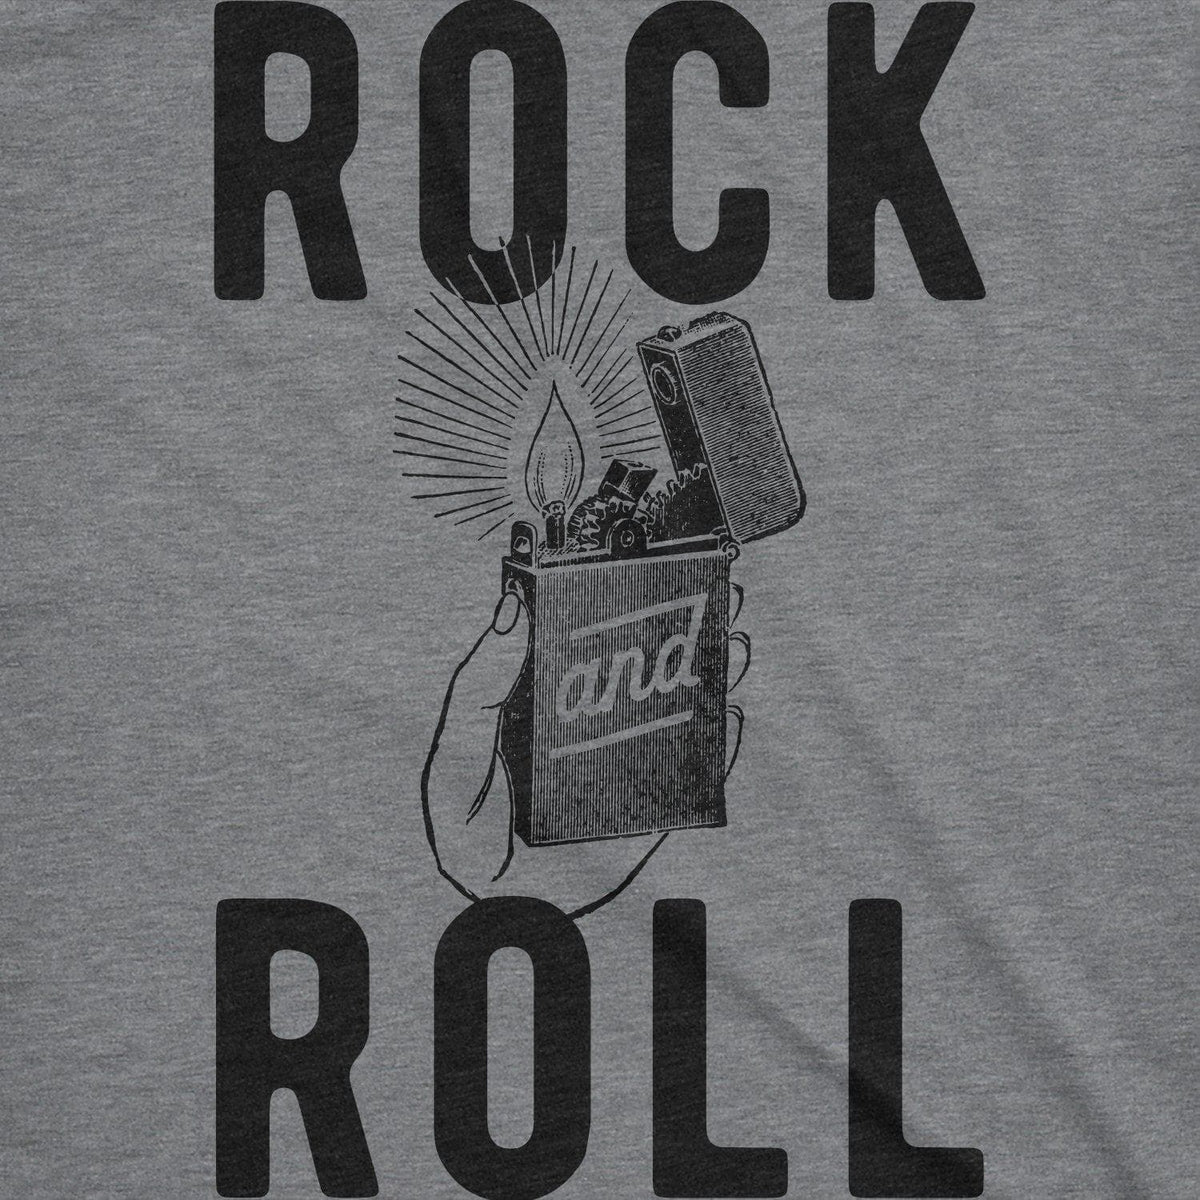 Rock And Roll Women&#39;s Tshirt  -  Crazy Dog T-Shirts